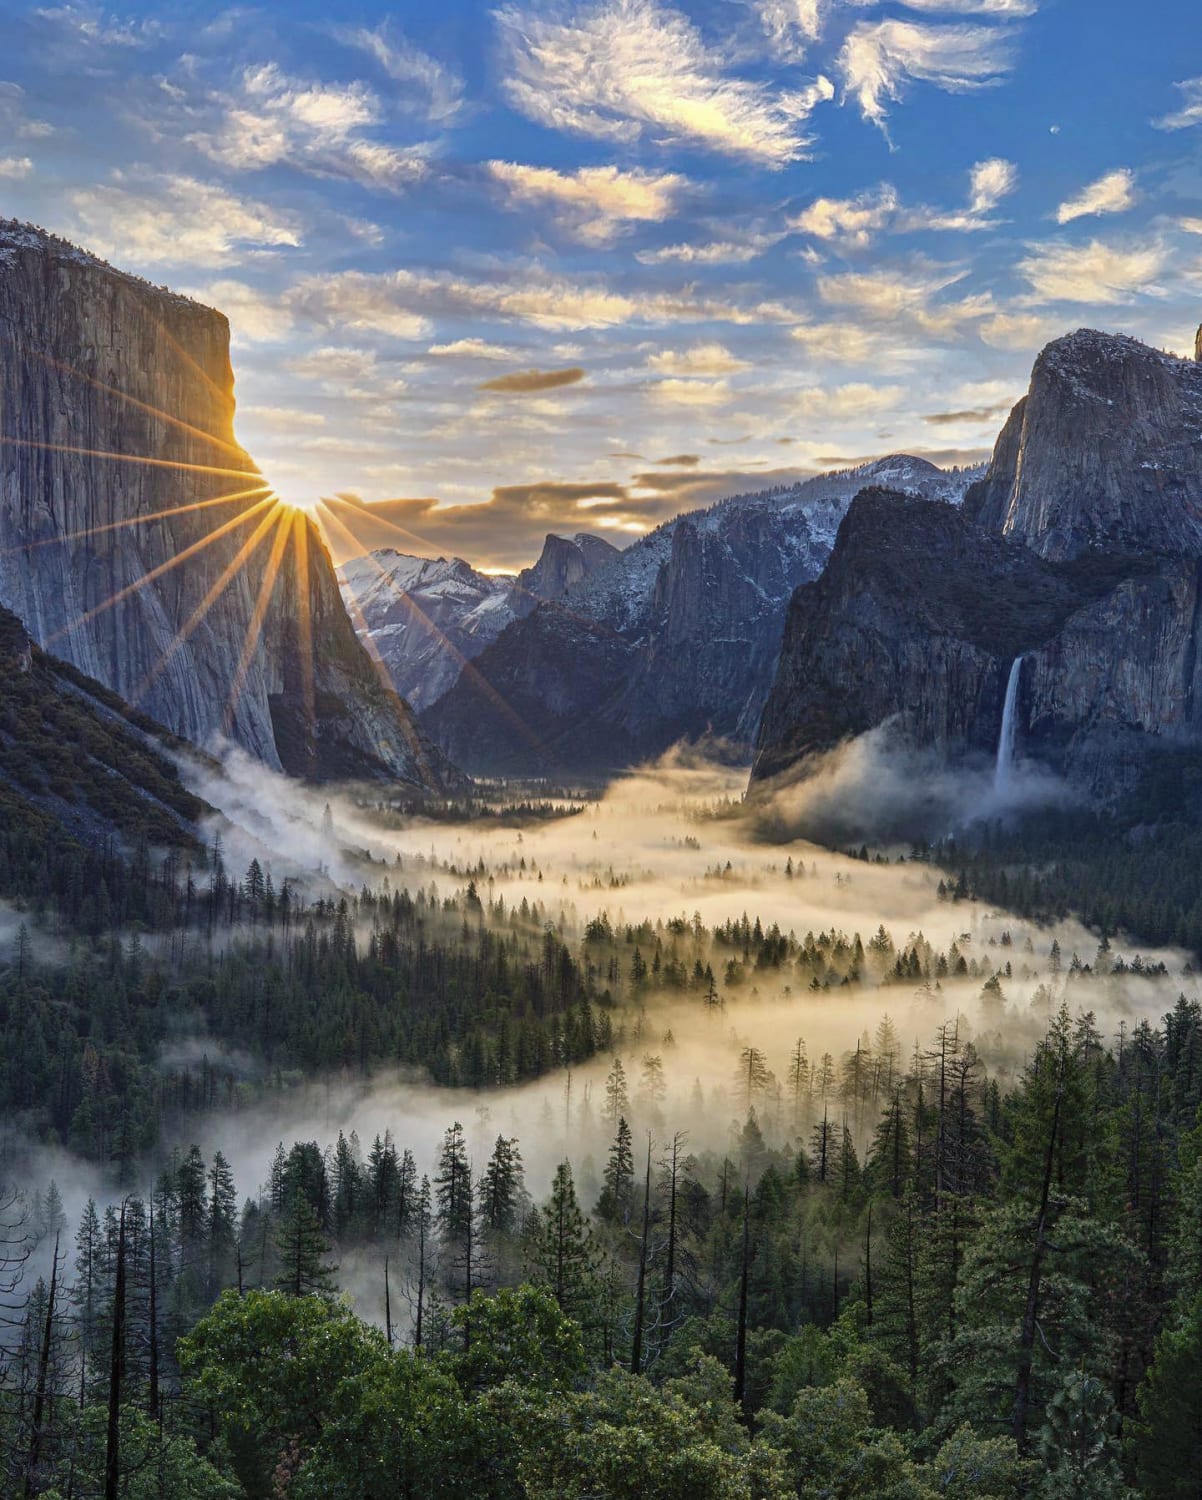 Morning mist rolling through Yosemite Valley, California